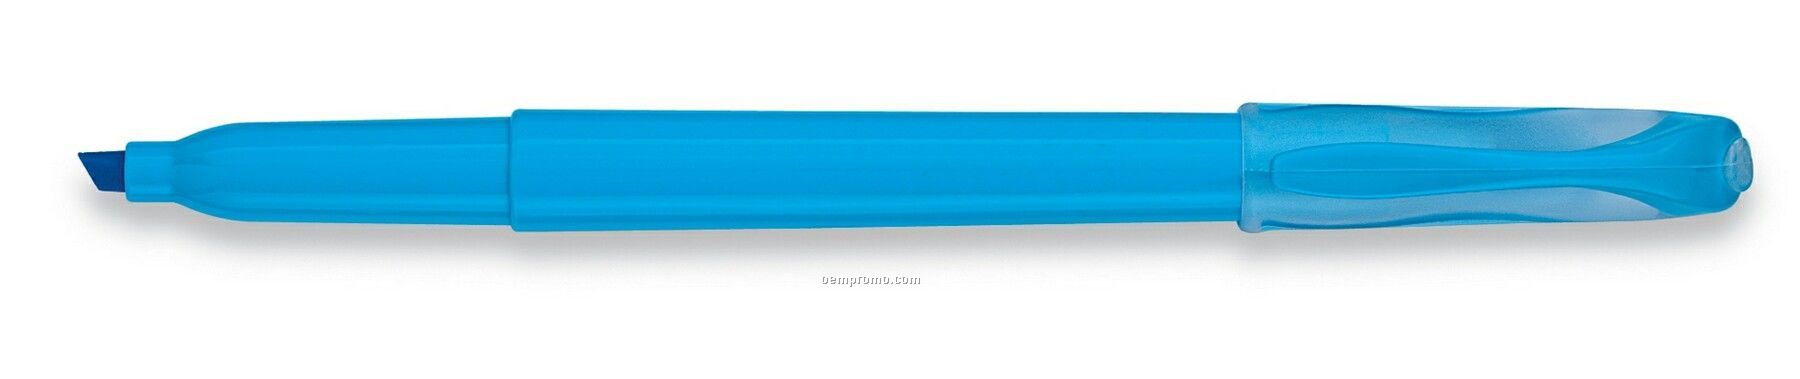 Sharpie Pocket Accent Fluorescent Blue Capped Highlighter